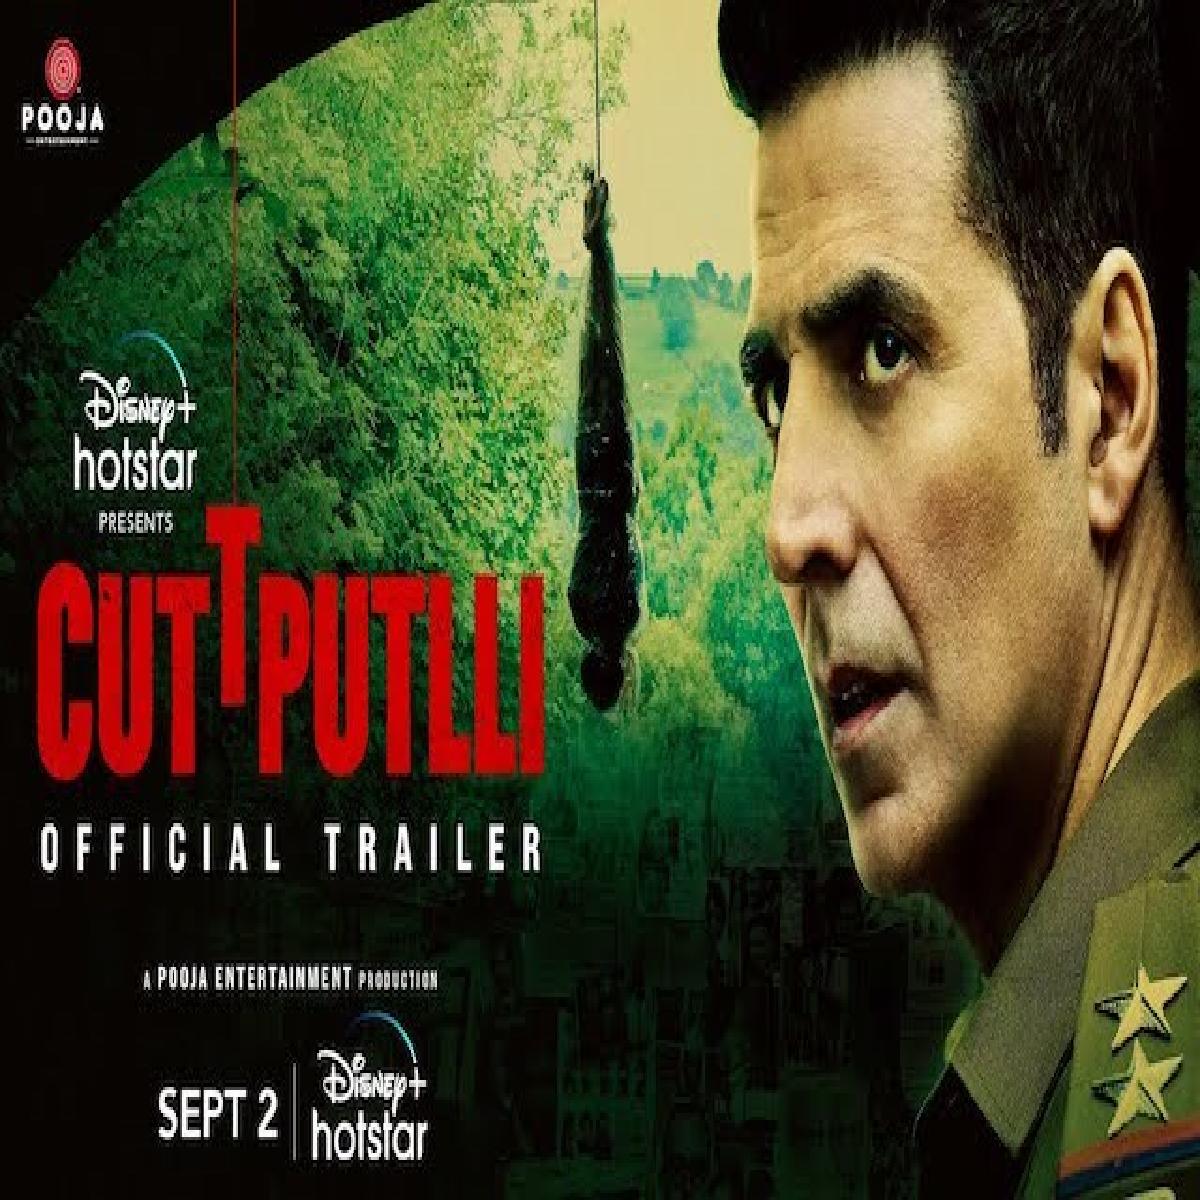 Cuttputlli Review - Cuttputlli is one of the best film made in recent times